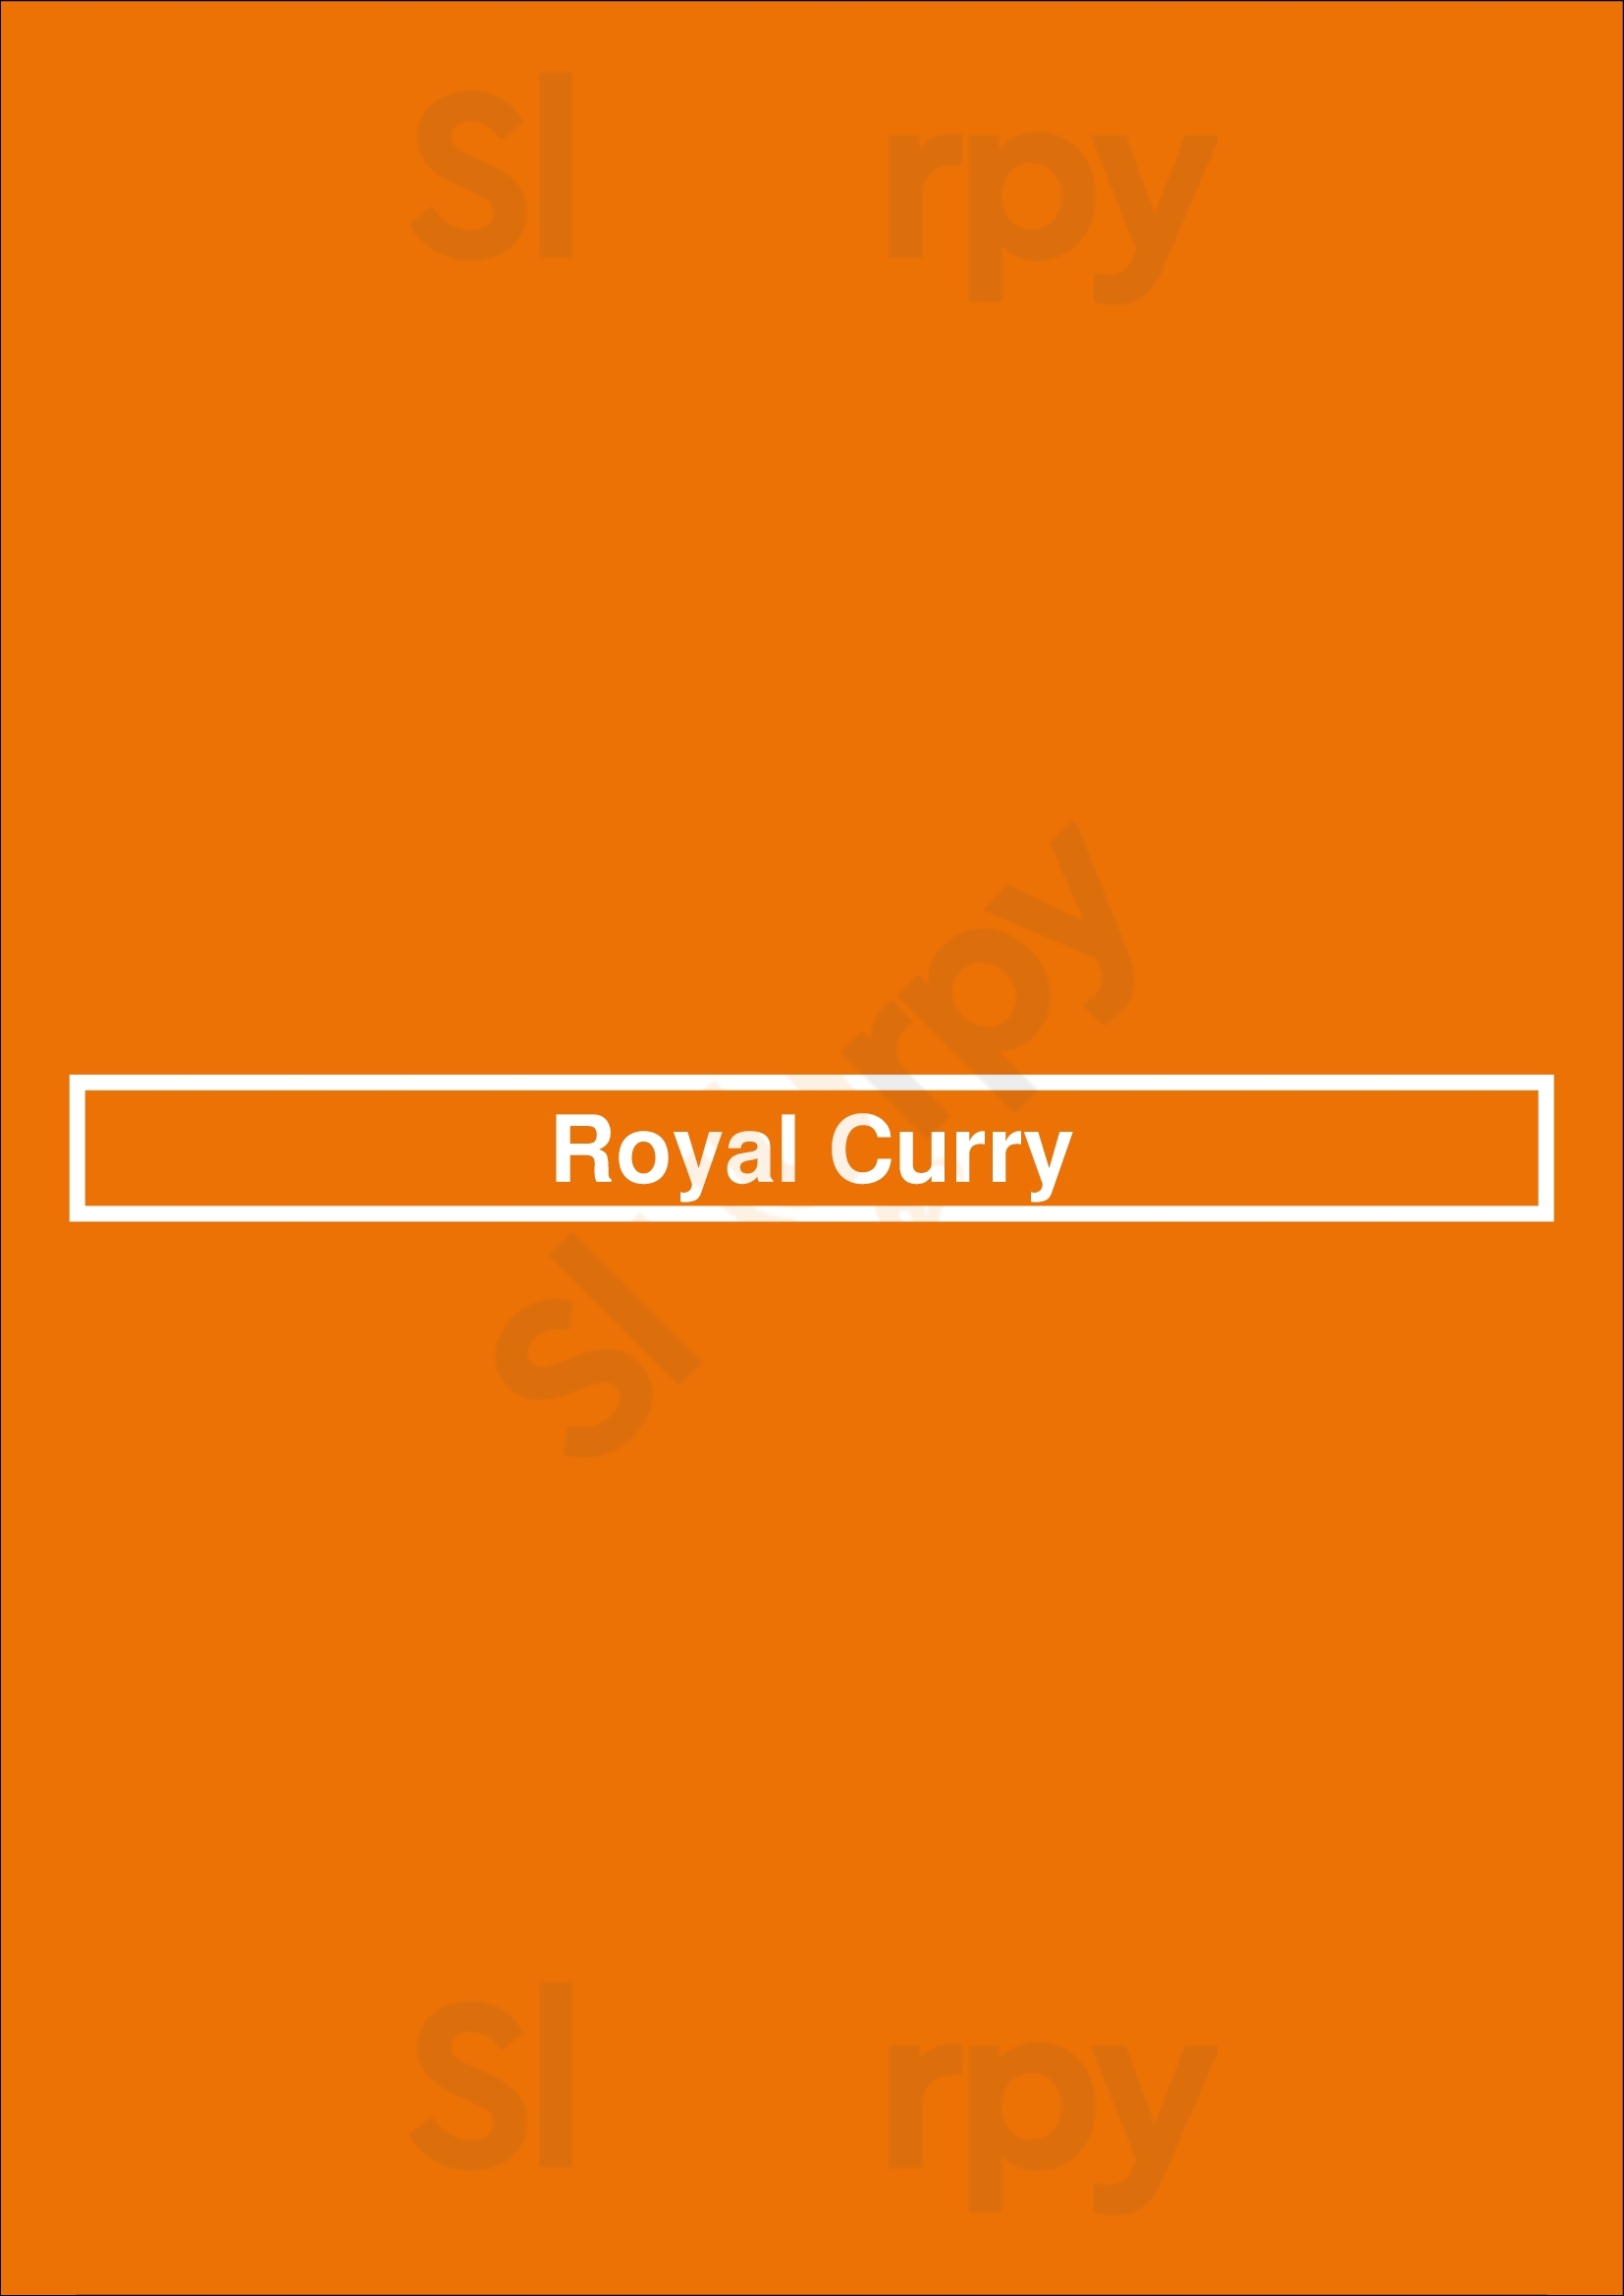 Royal Curry Leidschendam Menu - 1